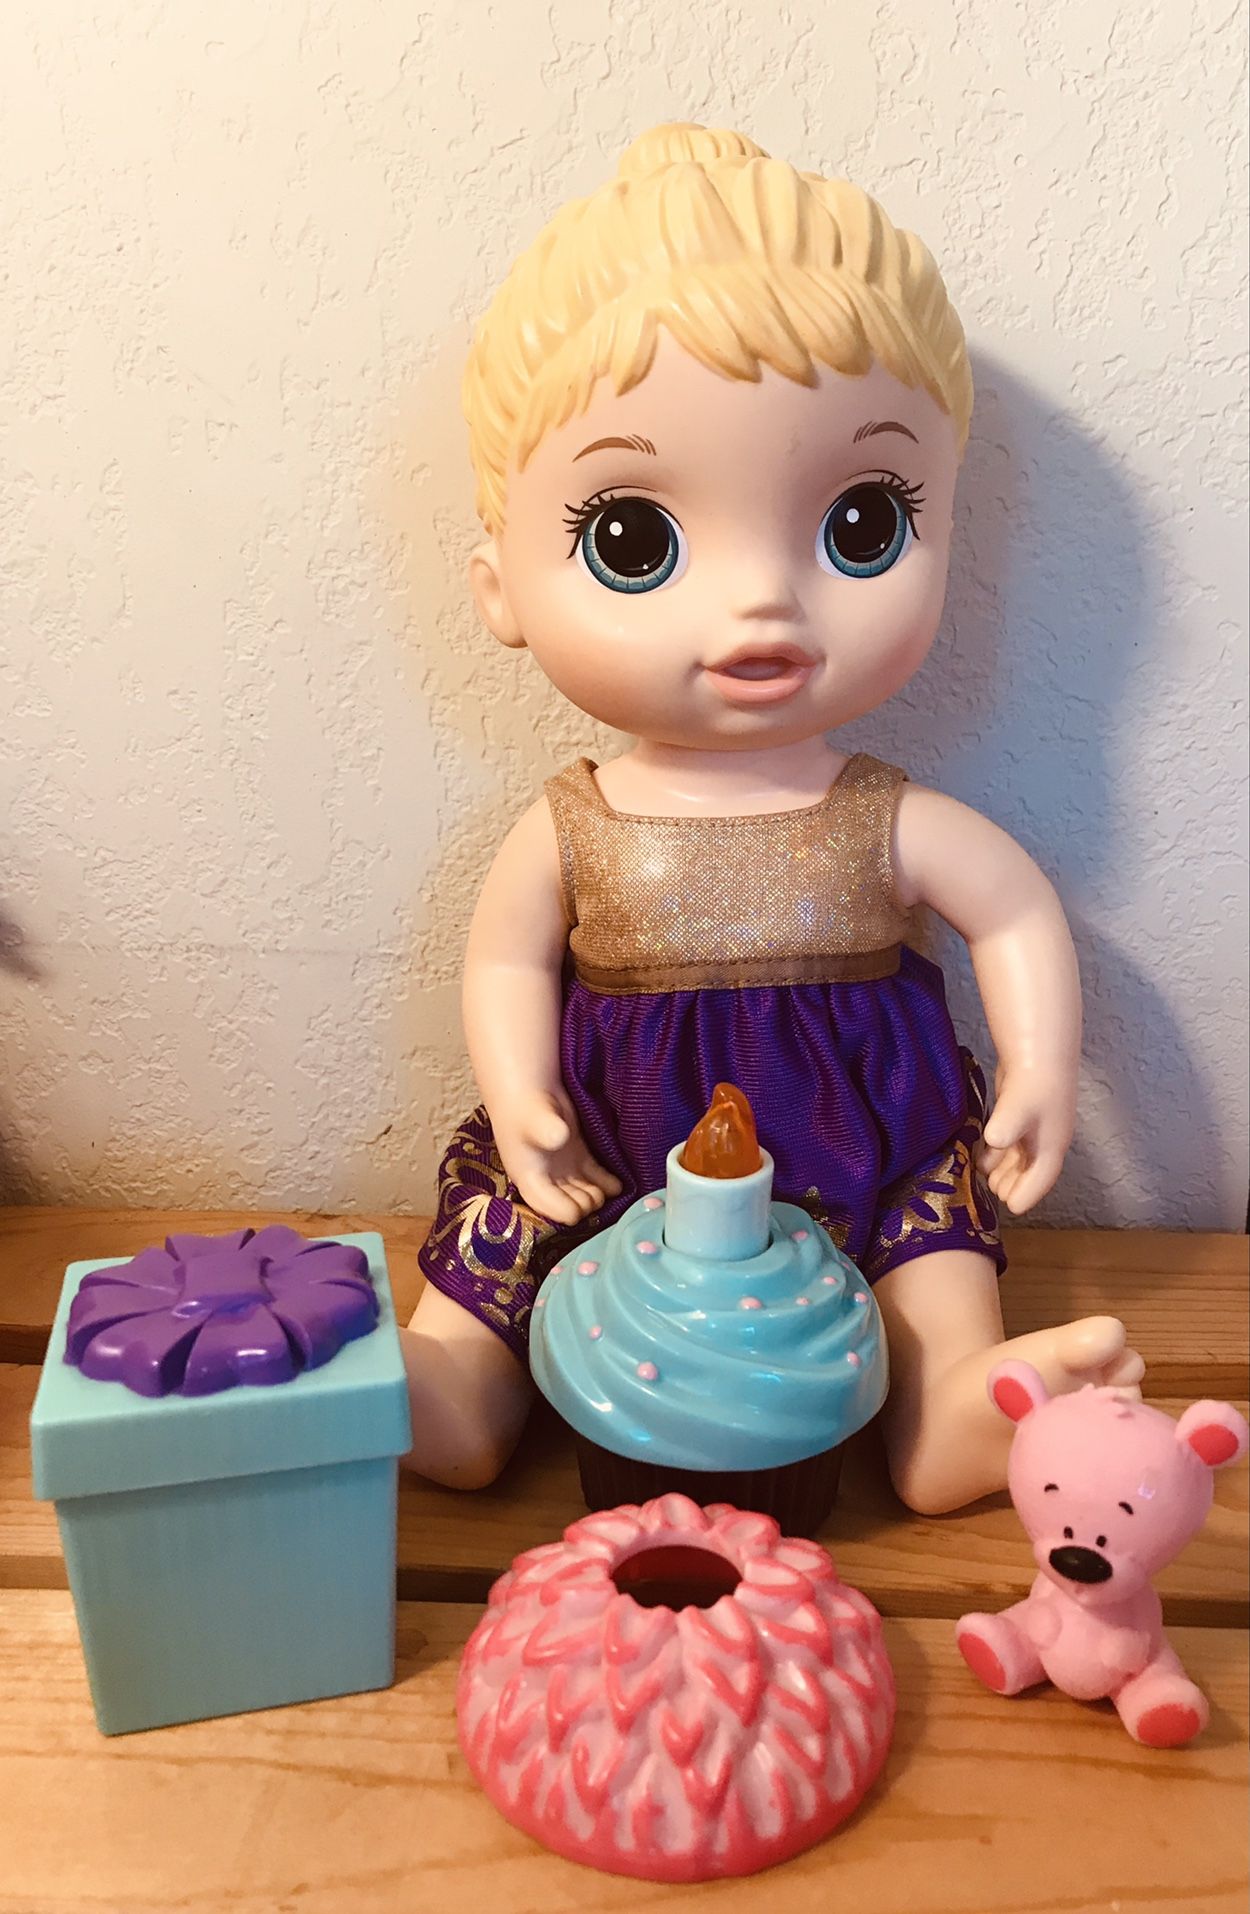 Hasbro baby alive birthday surprise blonde children's birthday party doll